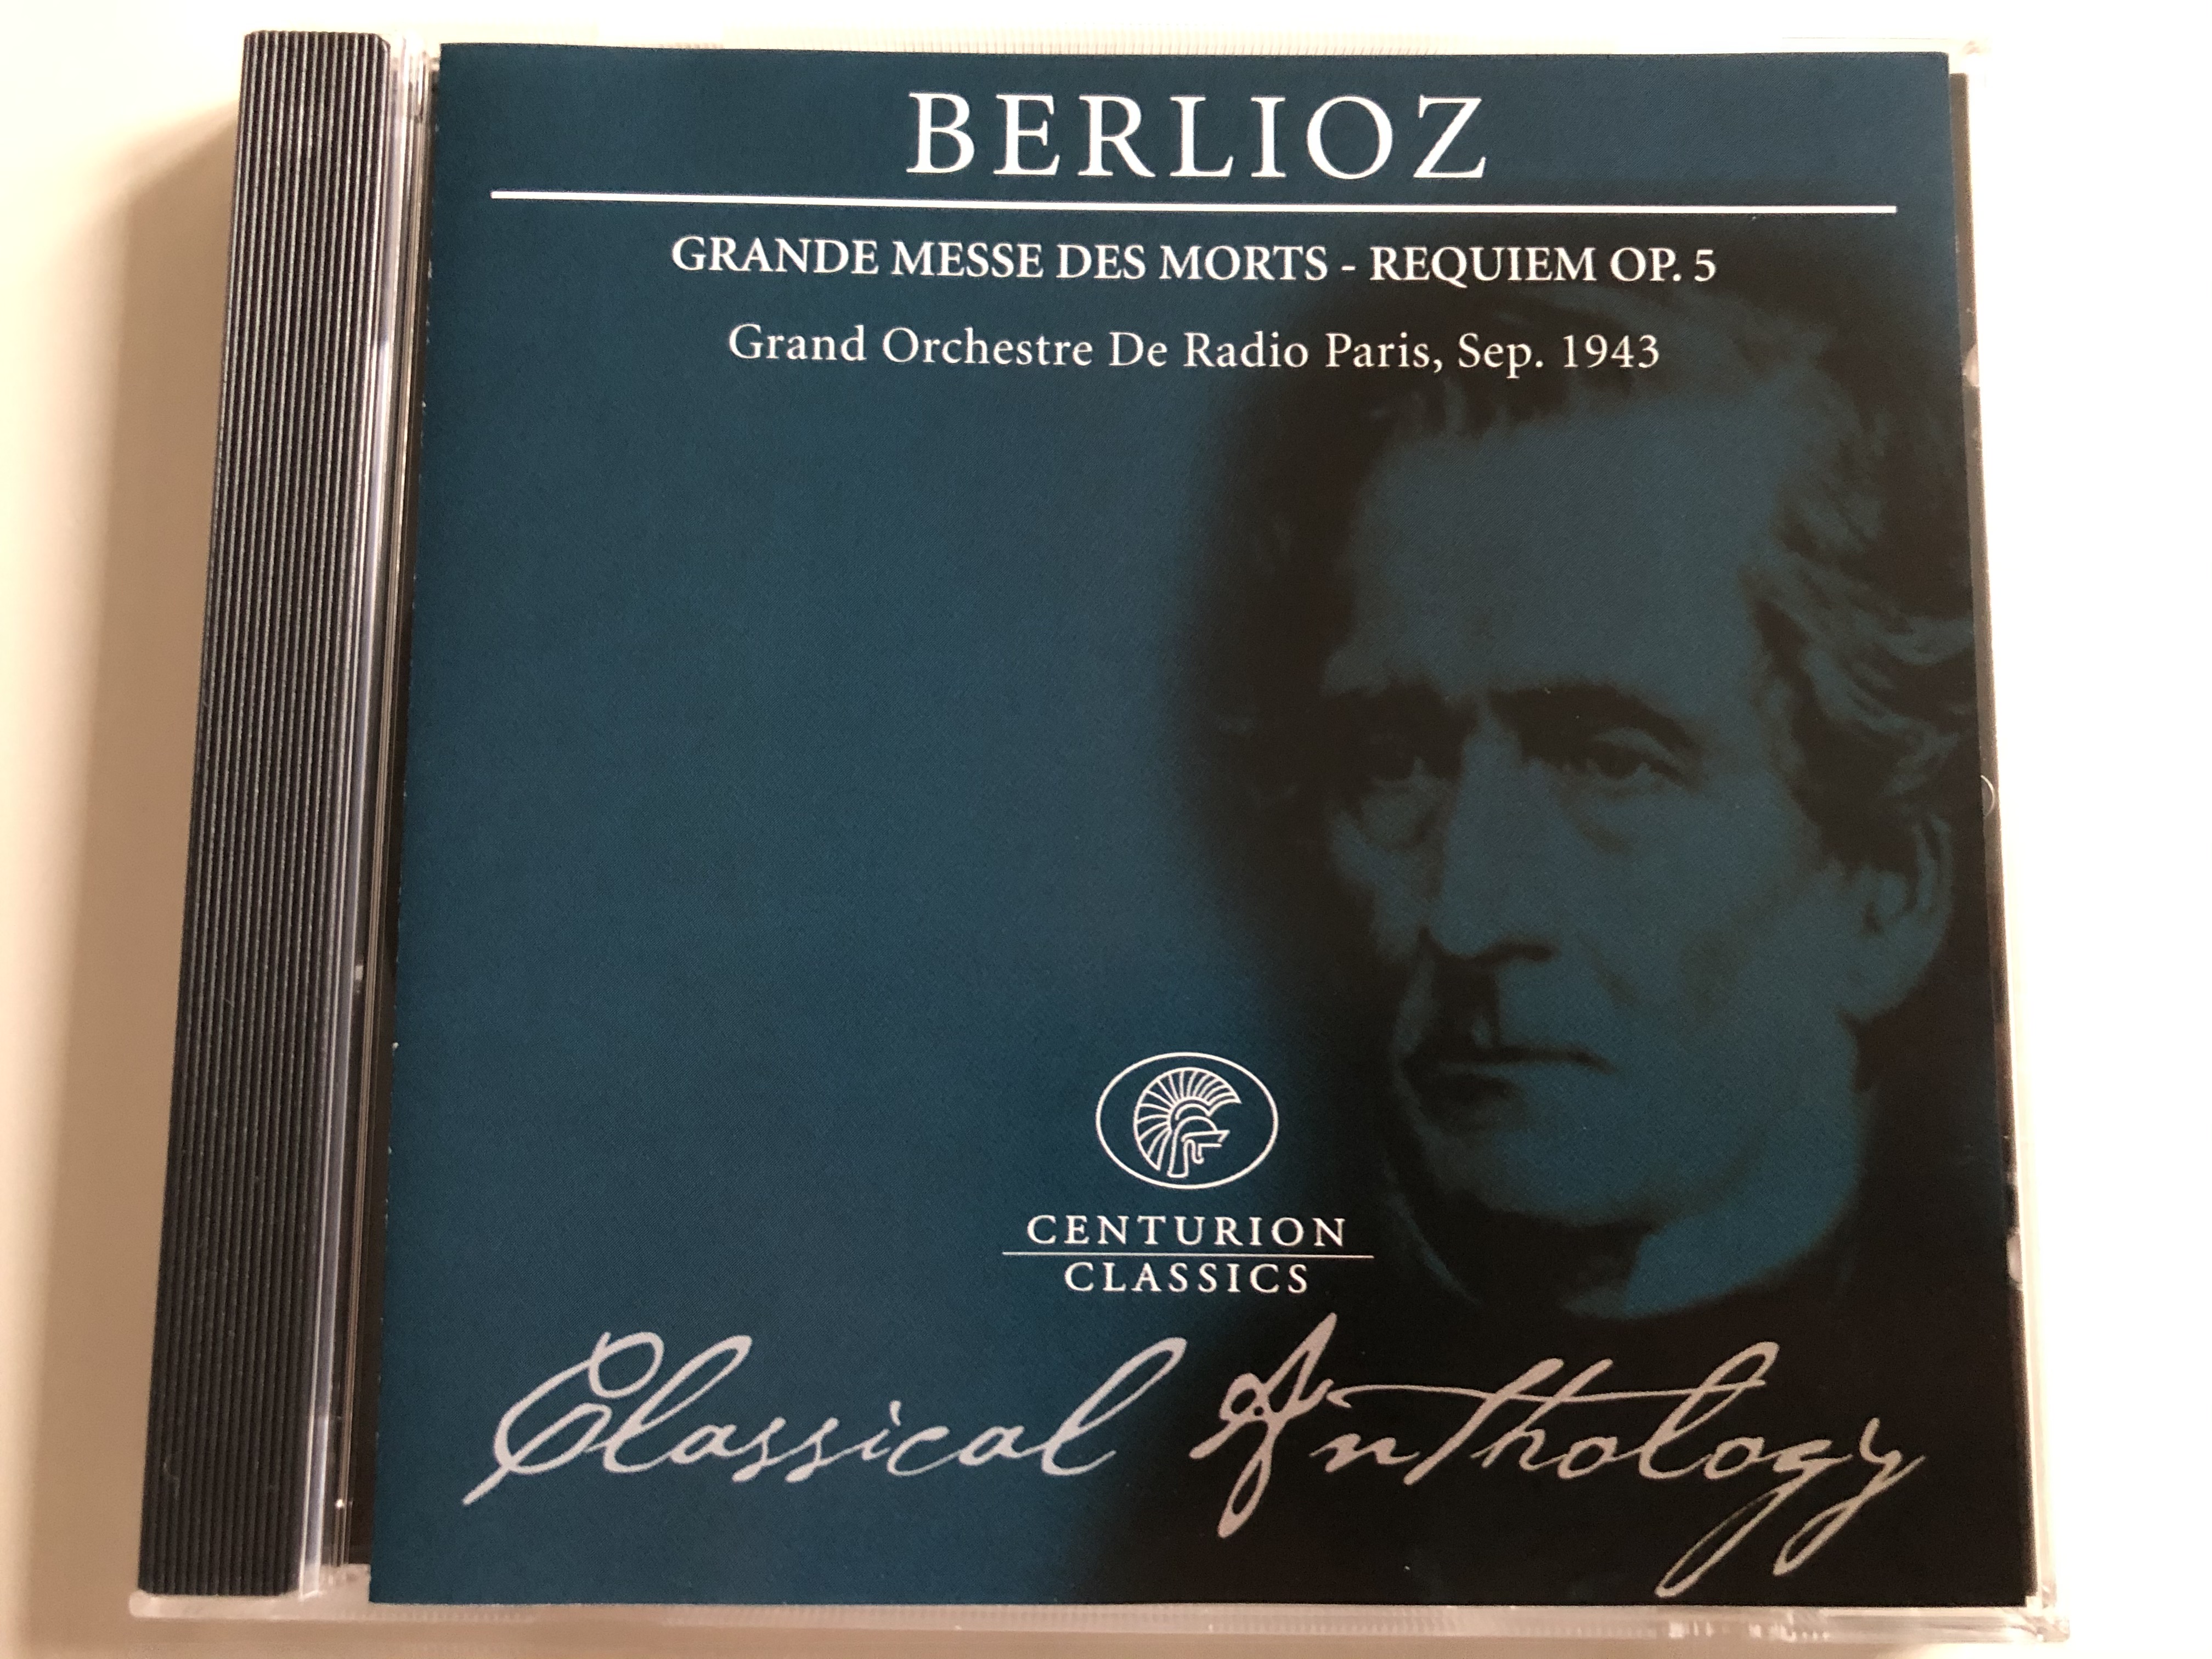 berlioz-grande-messe-des-morts-requiem-op.-5-grand-orchestre-de-radio-paris-sep.-1943-classical-anthology-centurion-classics-audio-cd-2004-iecc30001-6-1-.jpg